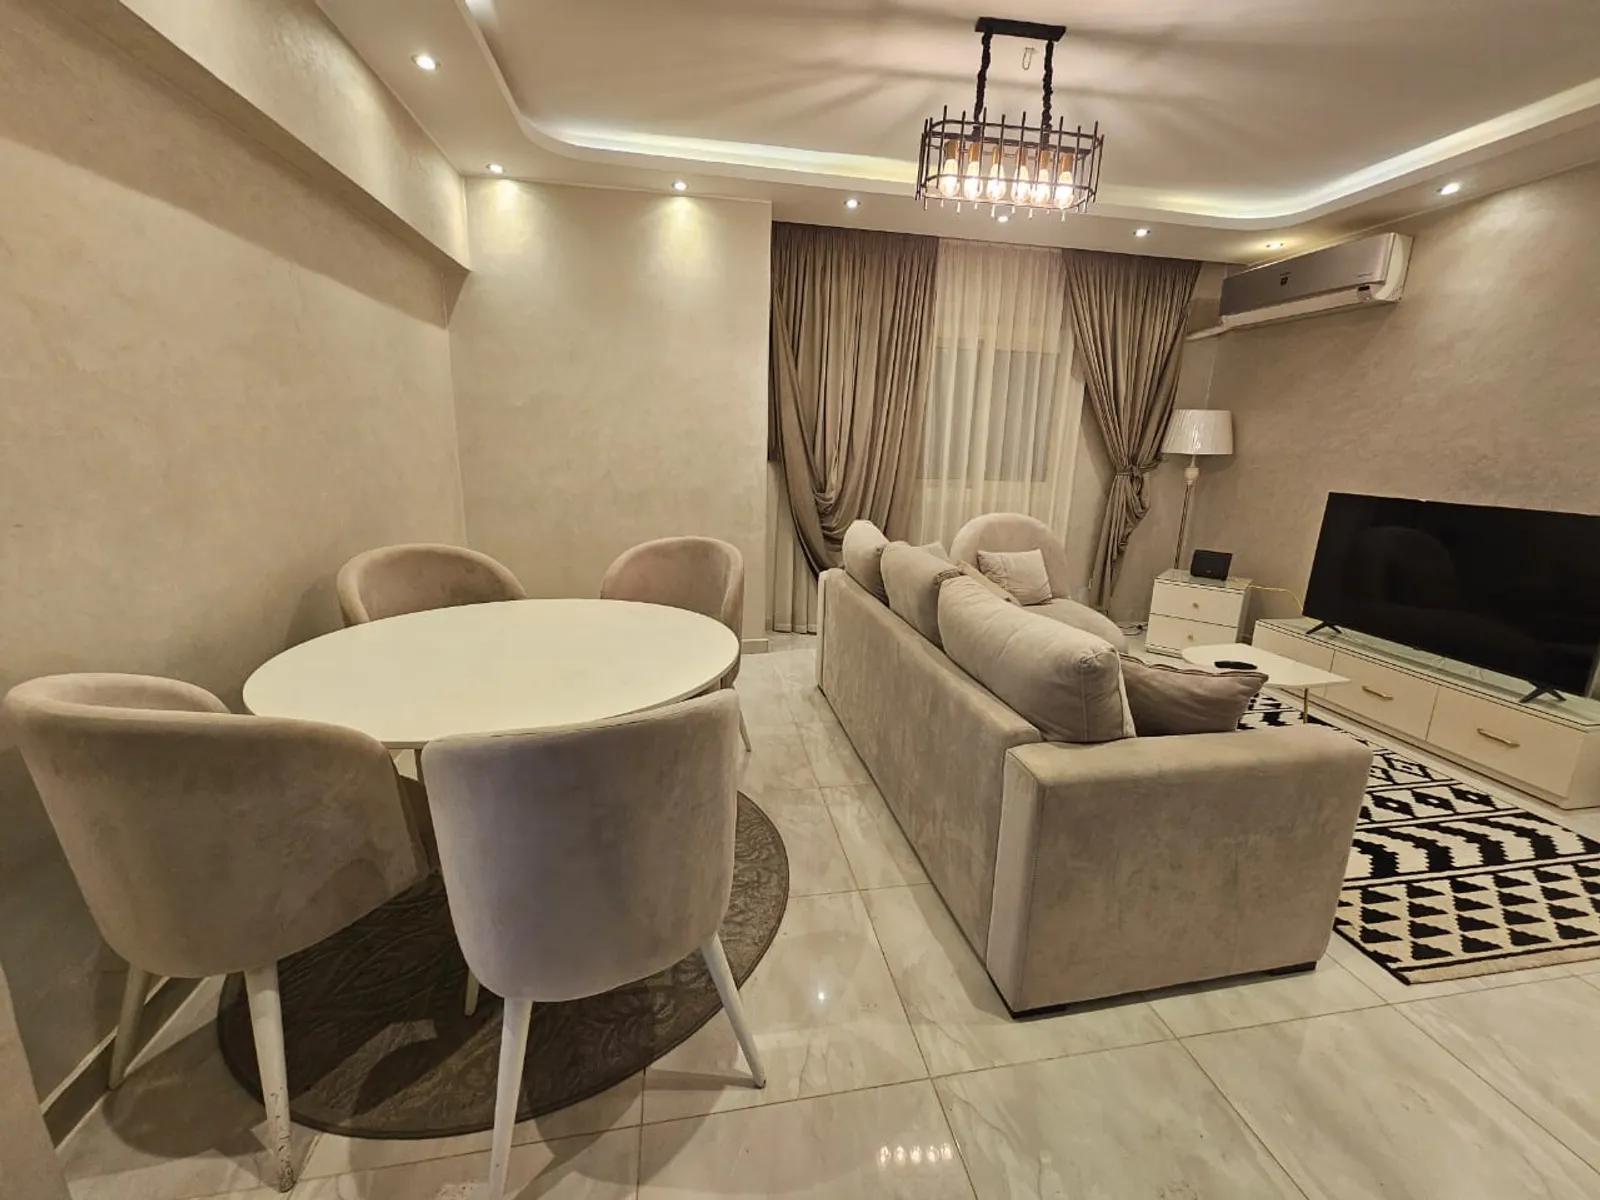 MODERN GROUND FLOOR APARTMENT FOR RENT IN MAADI DEGLA CAIRO EGYPT - #5811 - Modern furnished